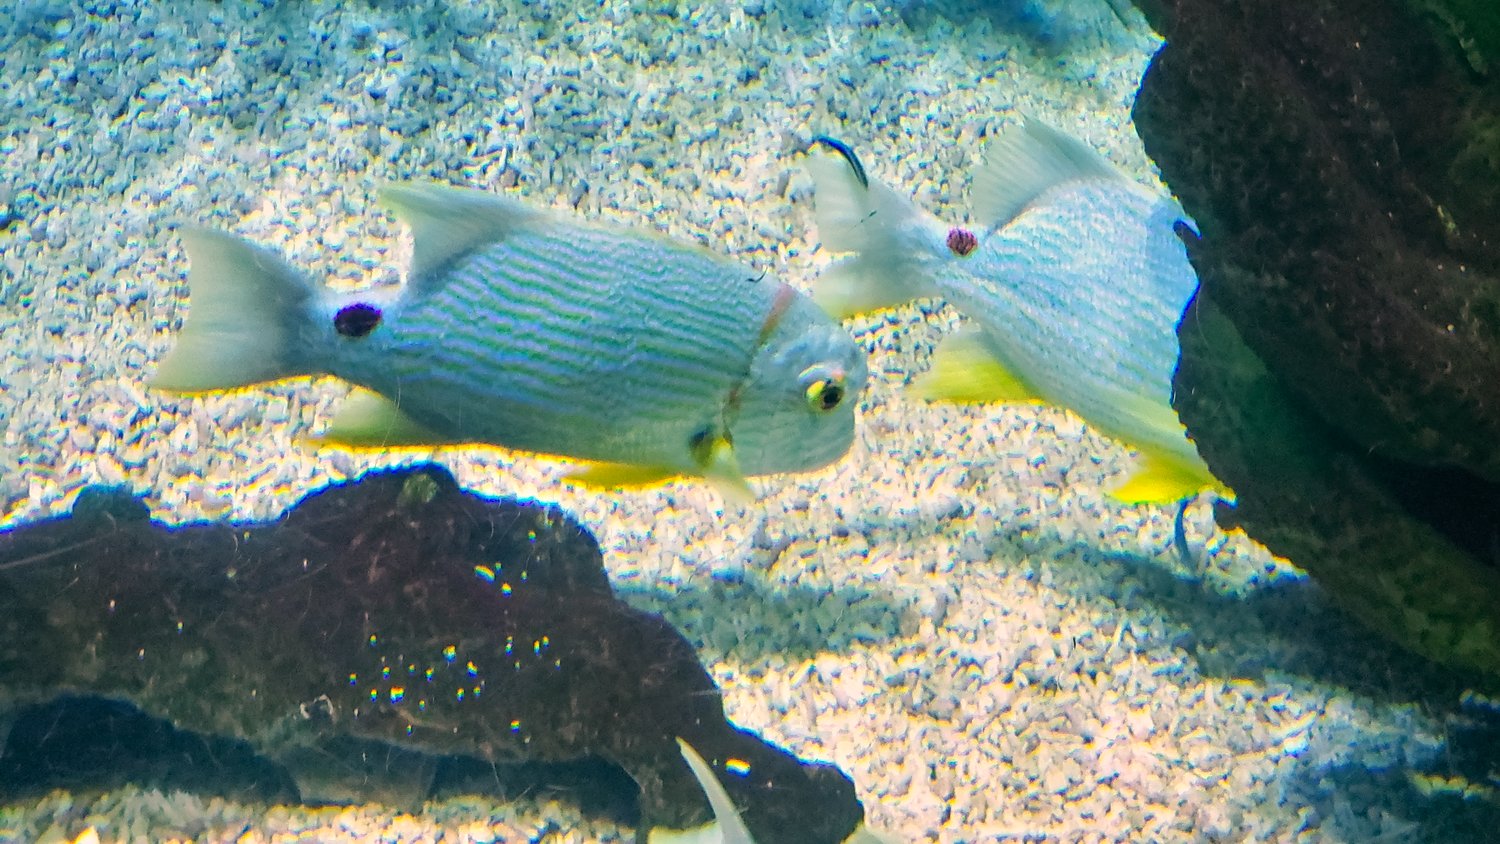 Display at Shedd Aquarium.